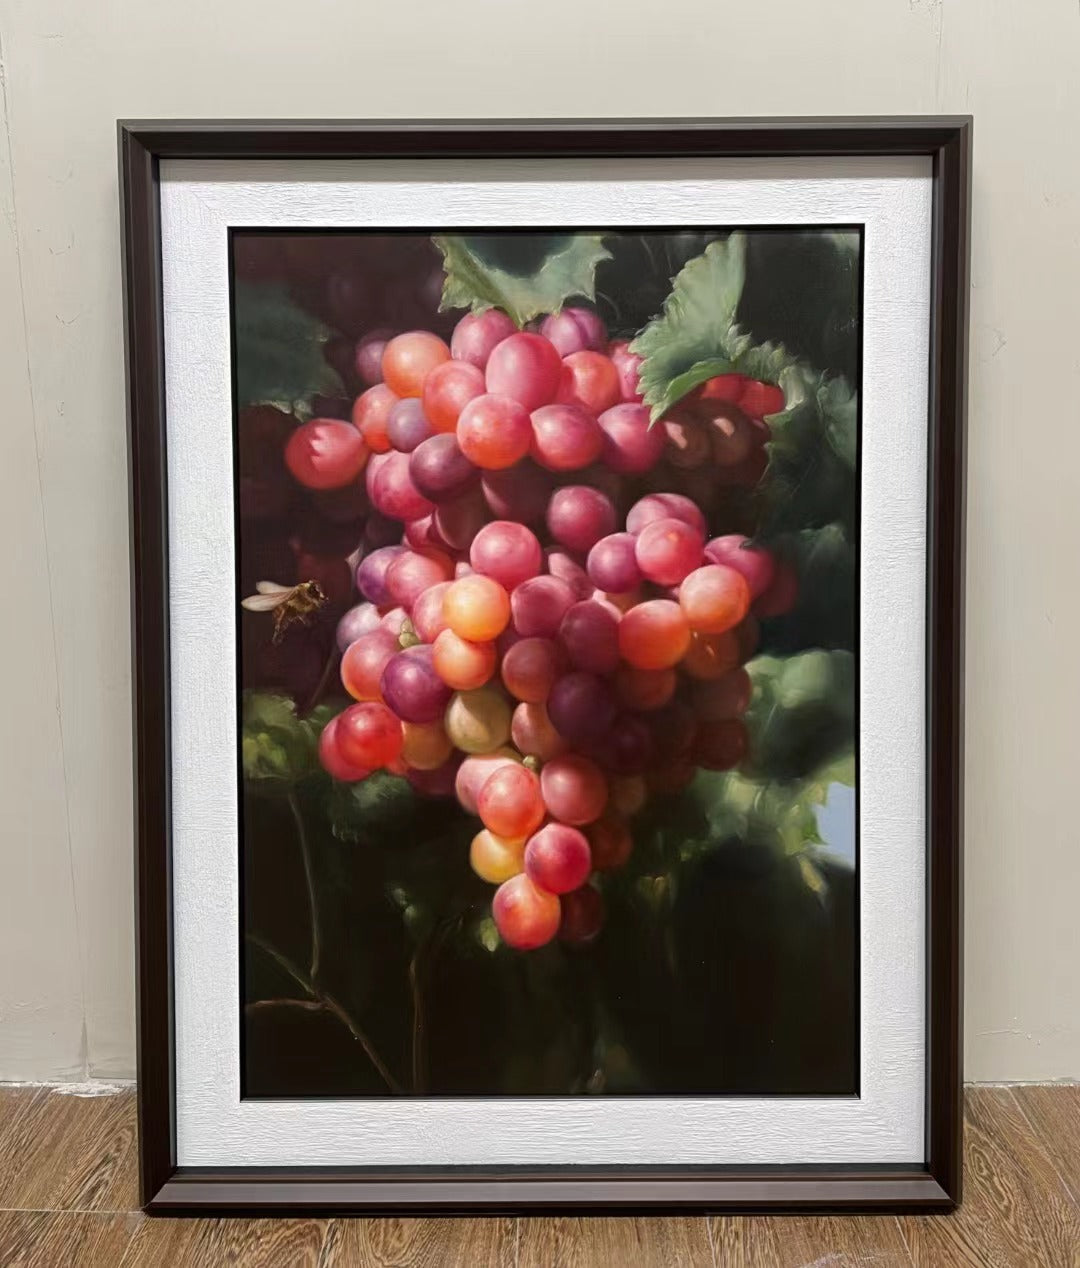 Grapes Original Oil Painting Rustic Style Fruit Artwork Photorealistic Food Painting M2015